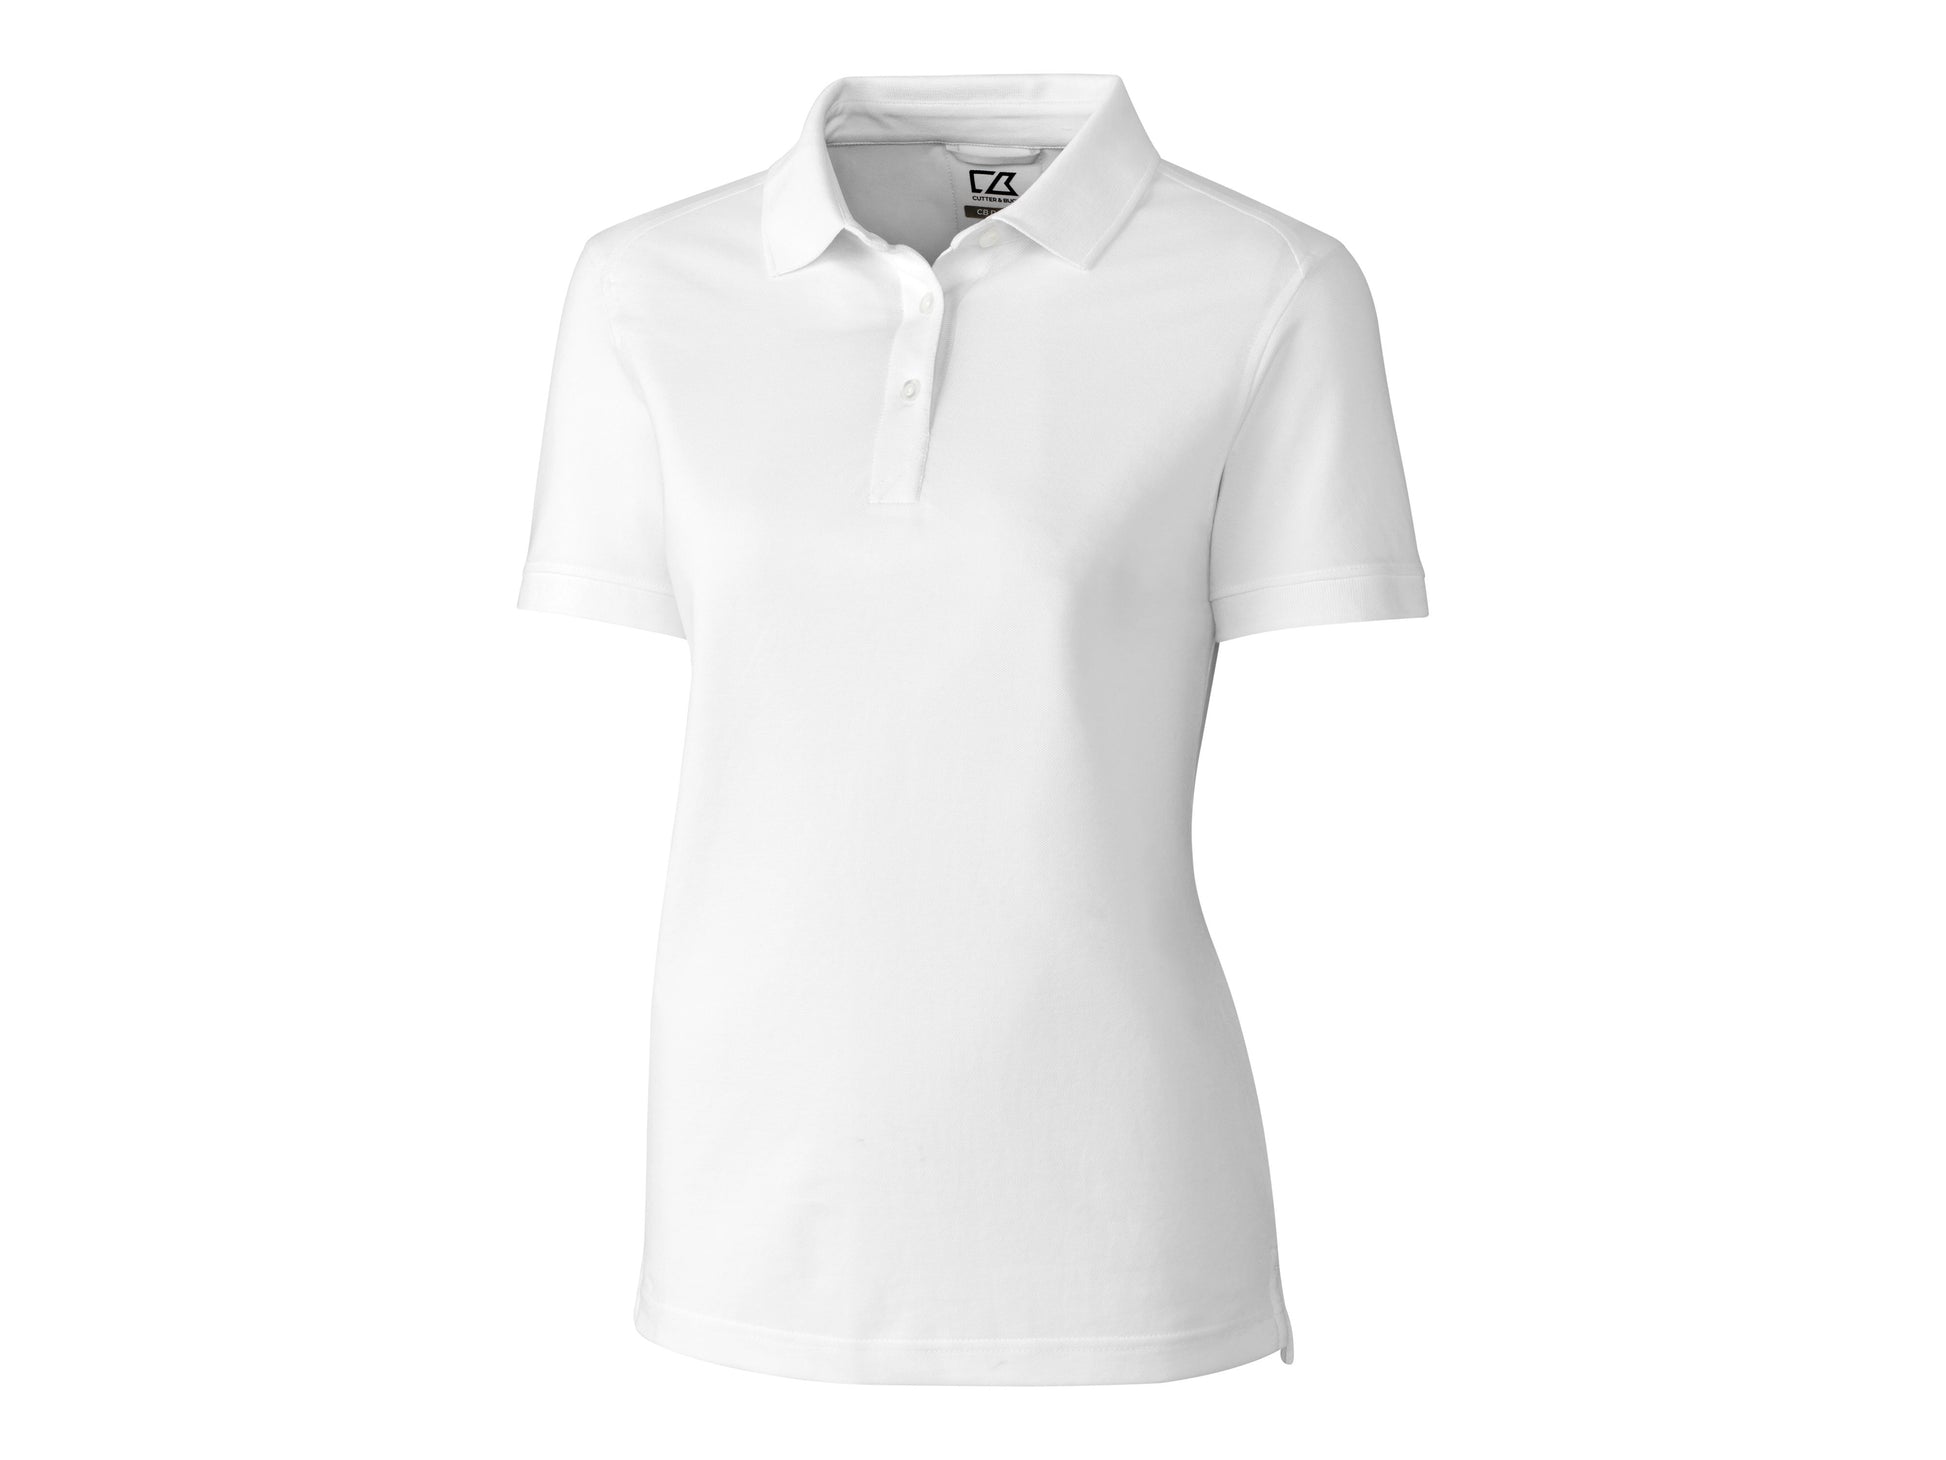 Cutter and Buck Shirts Advantage Polo (Women's Cut) - LCK08685 - White